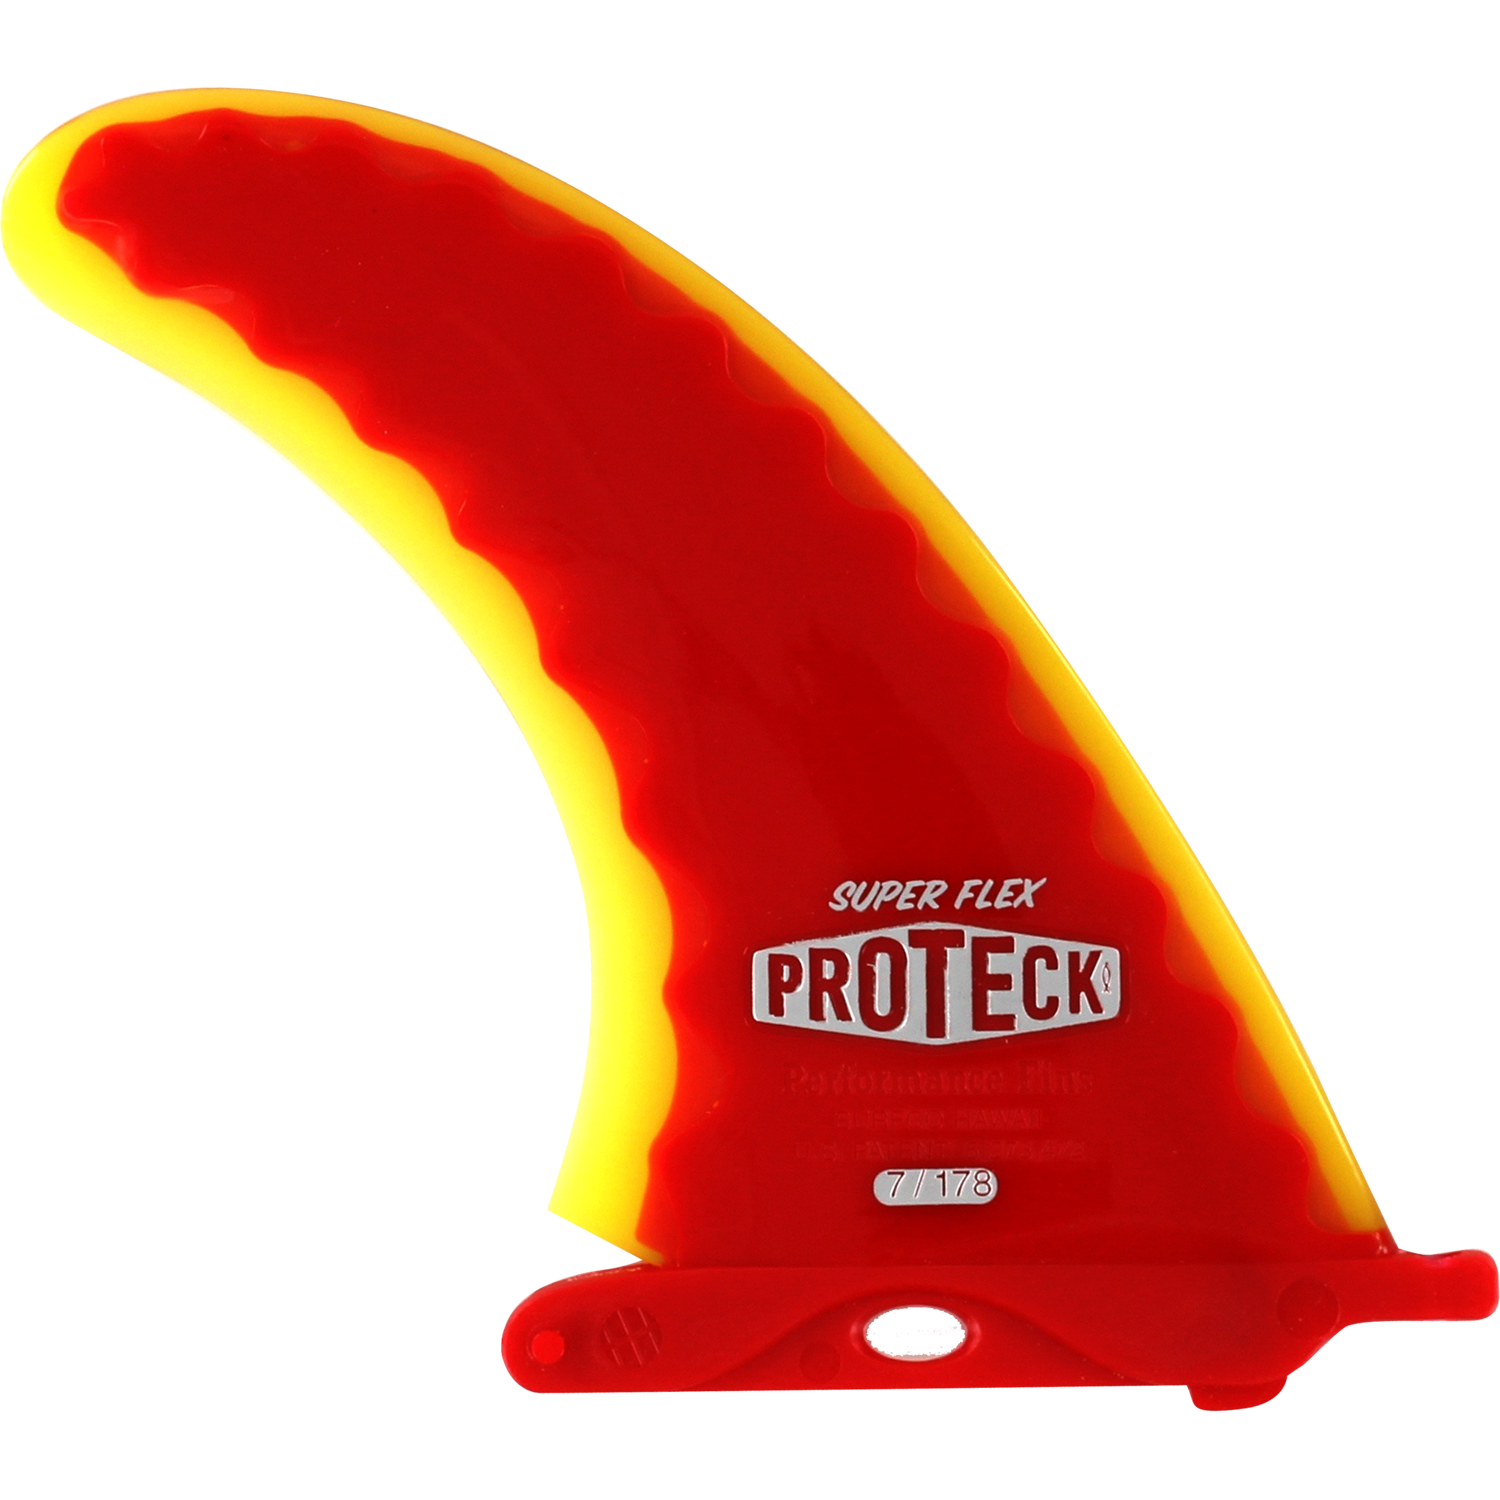 Proteck Super Flex Lb Center 7.0 Red/Yellow Surfboard FIN  -  1 SINGLE FIN